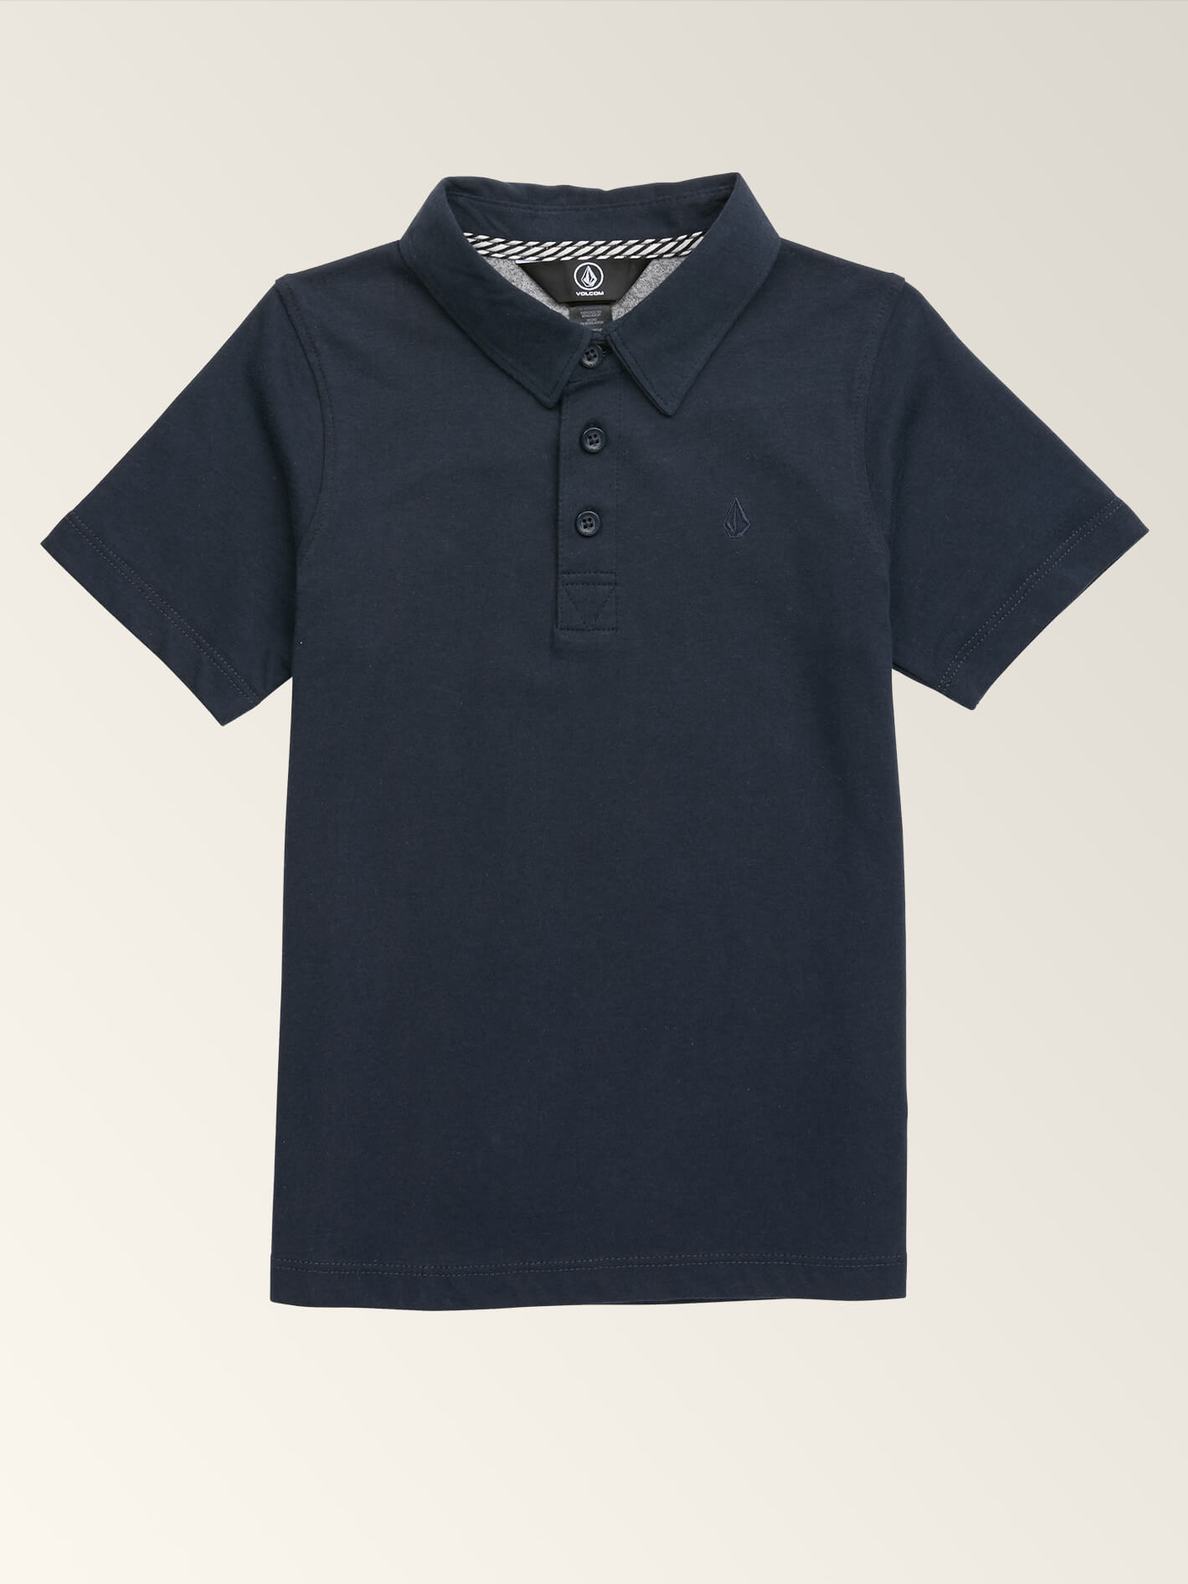 Volcom Wowzer Short Sleeve Kids Polo Shirt NVY-Navy 7